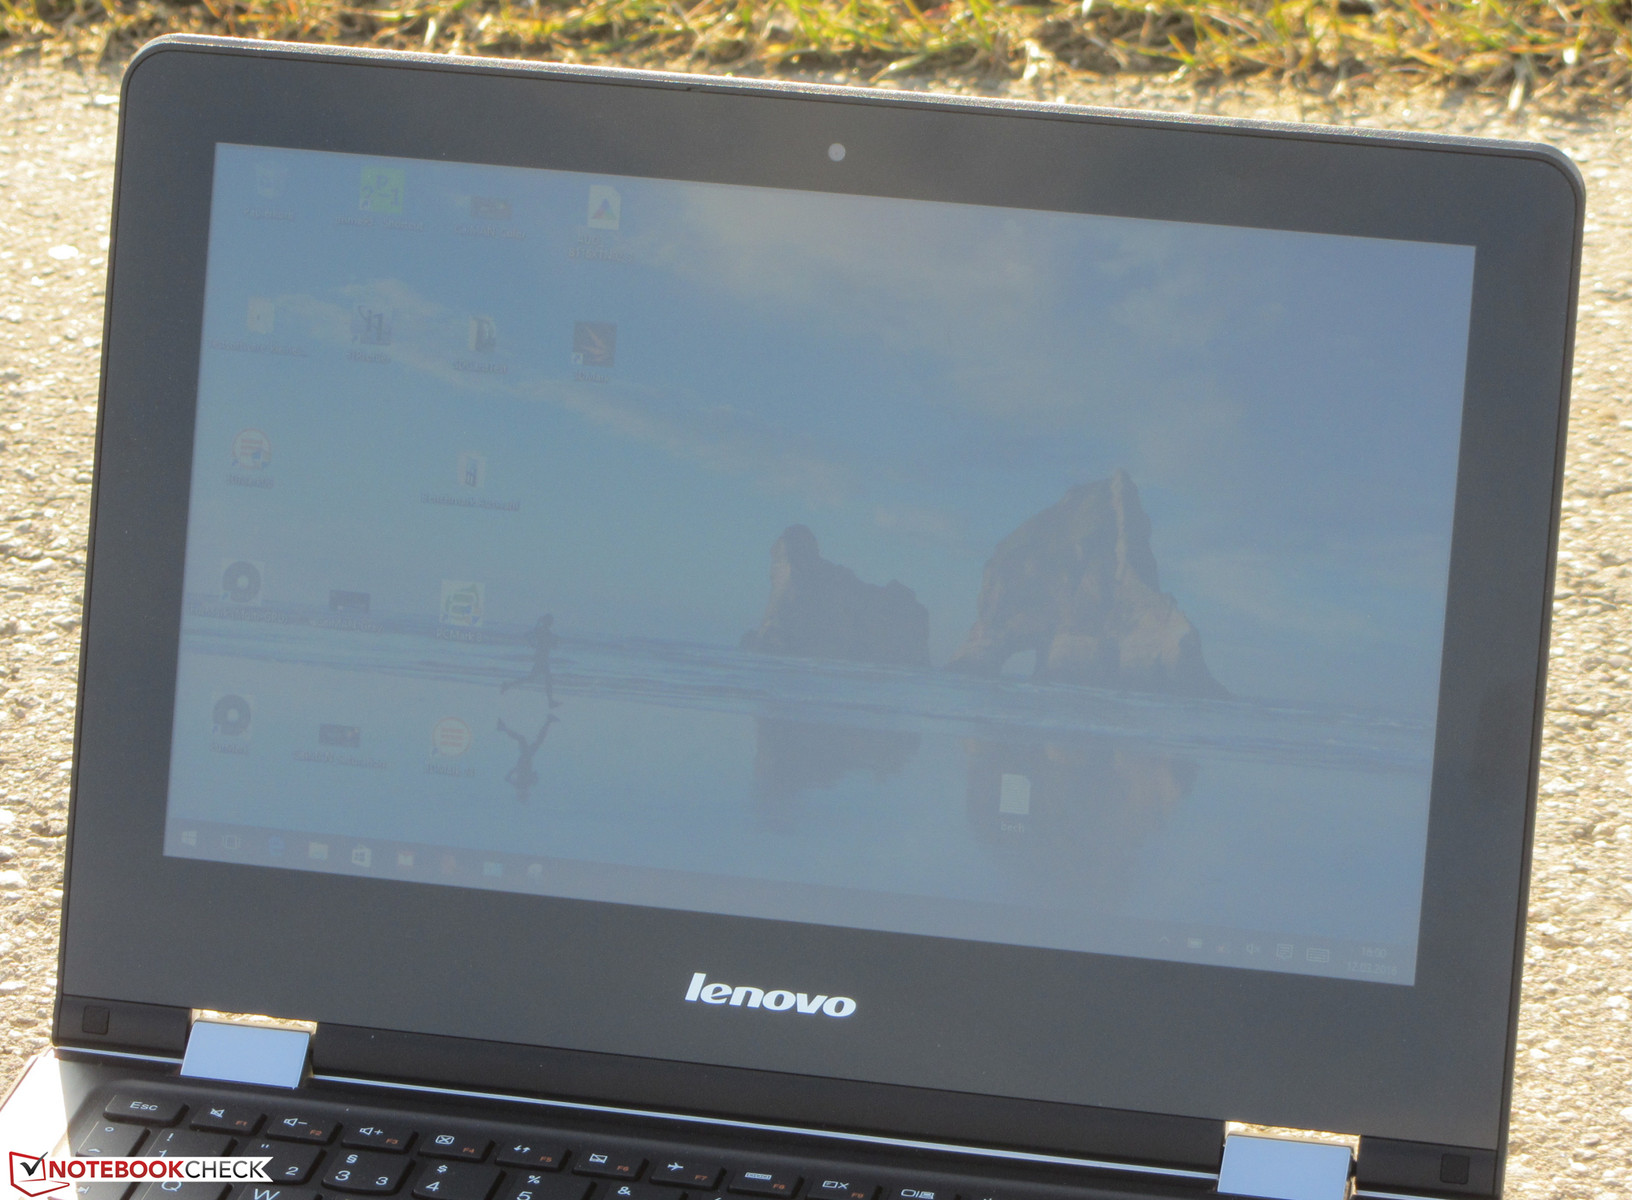 Lenovo Yoga 300-11IBR Convertible Review - NotebookCheck.net Reviews